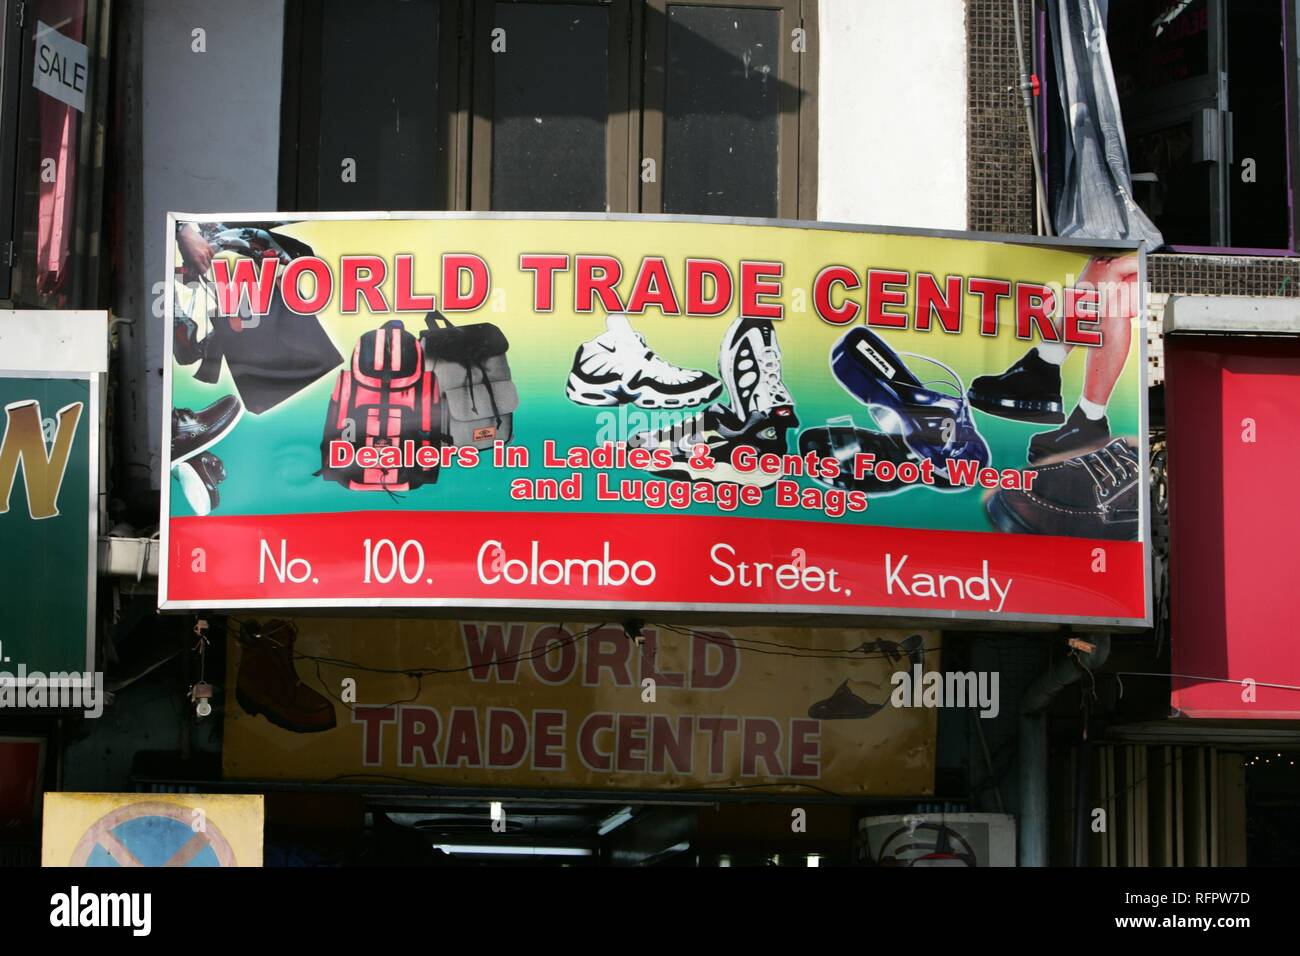 LKA, Kandy, Sri Lanka : signo de una tienda, el World Trade Center. Foto de stock